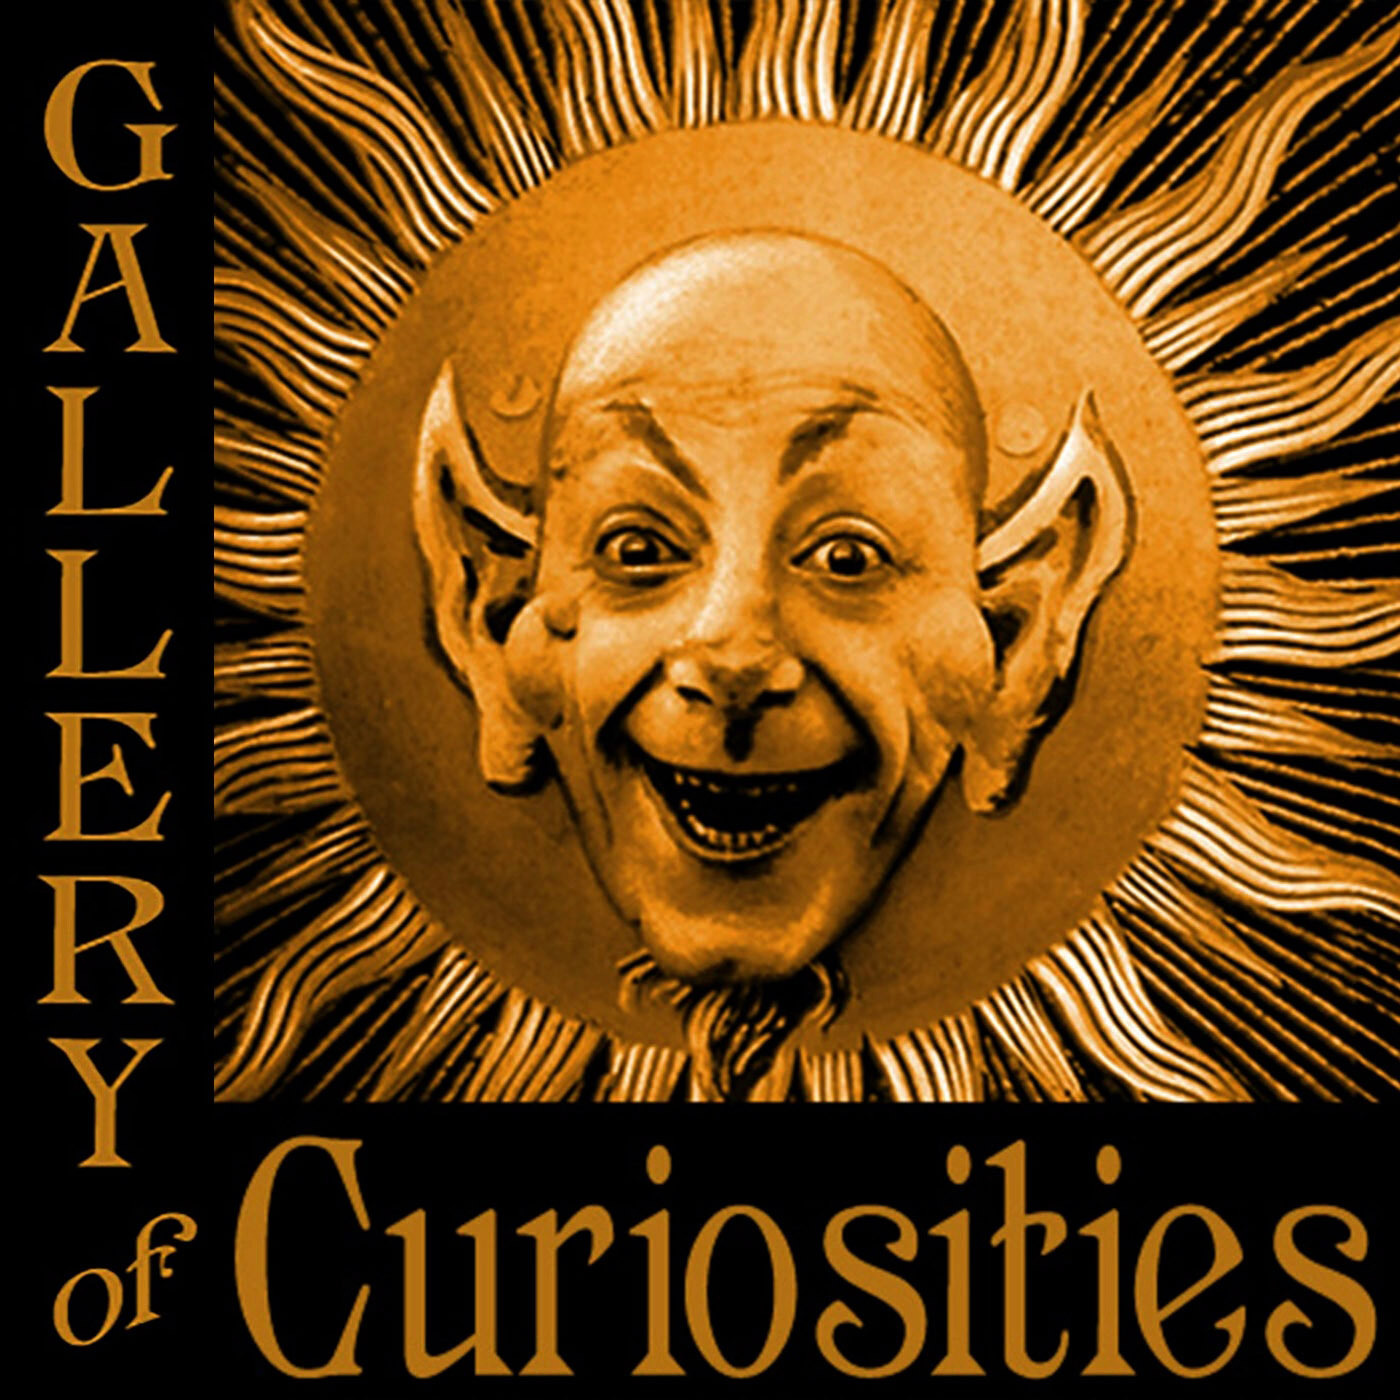 Gallery of Curiosities Podcast artwork